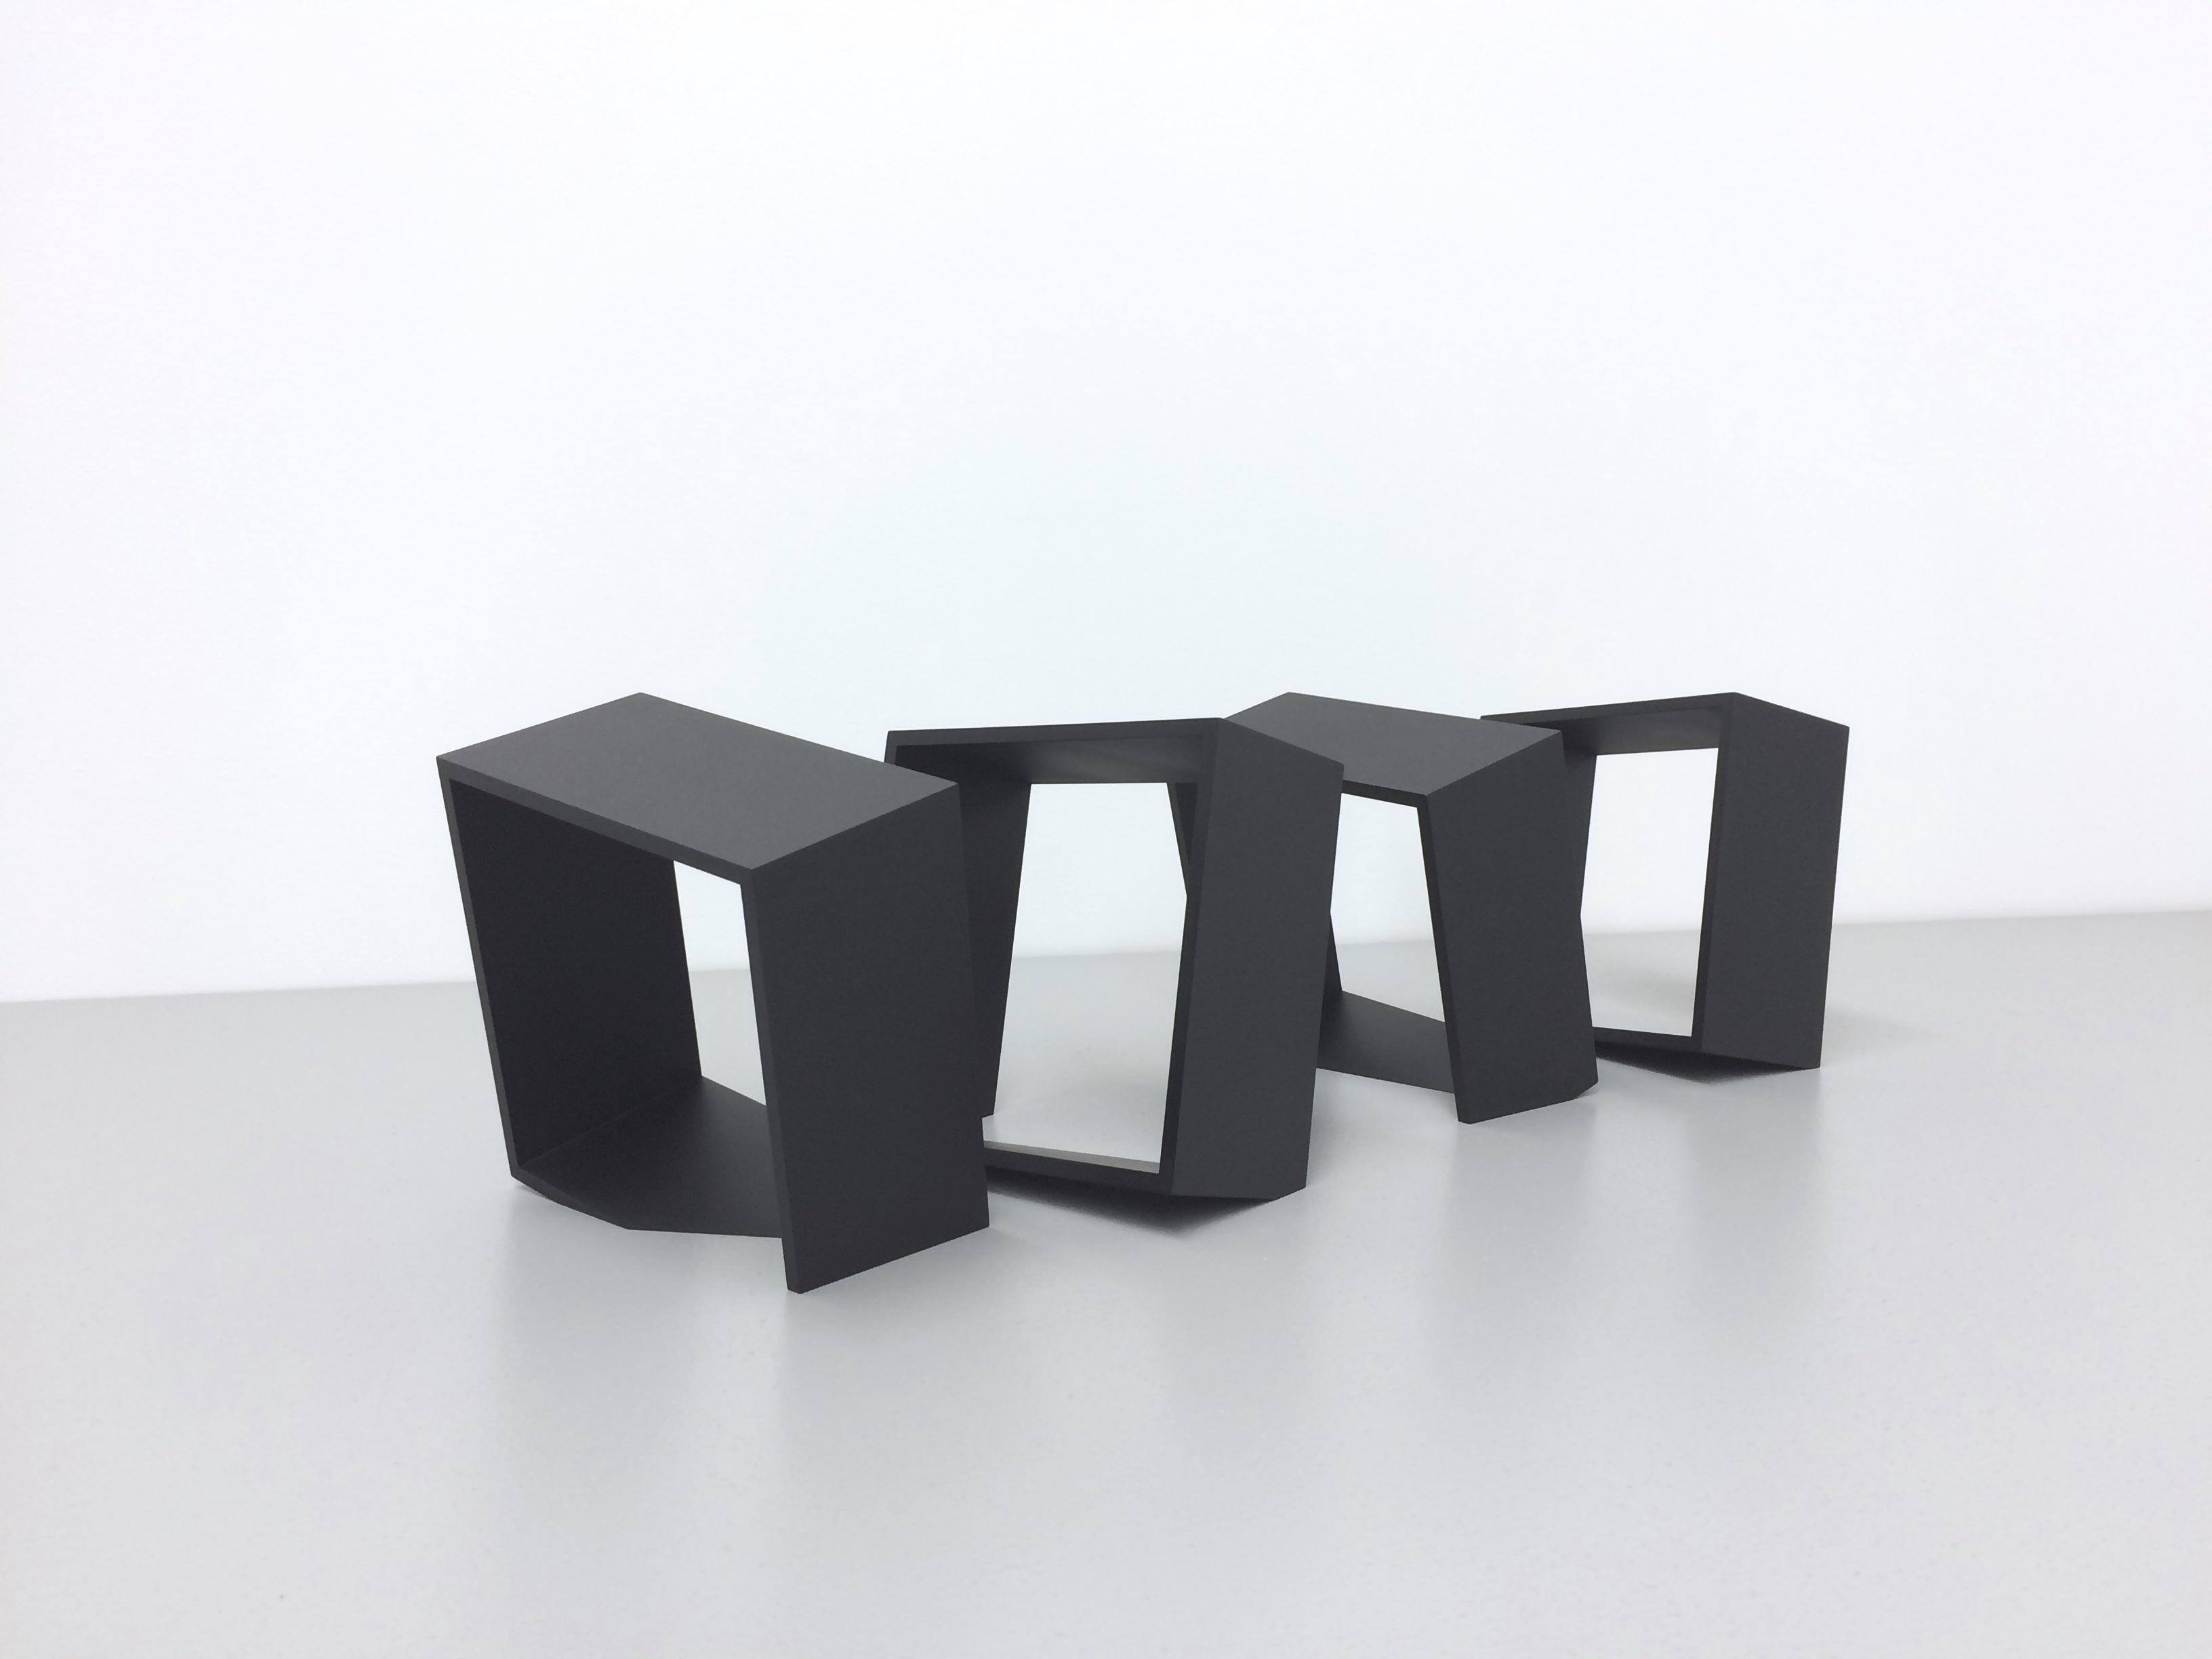 Untitled (4 black units) - Sculpture by Thomas Lendvai